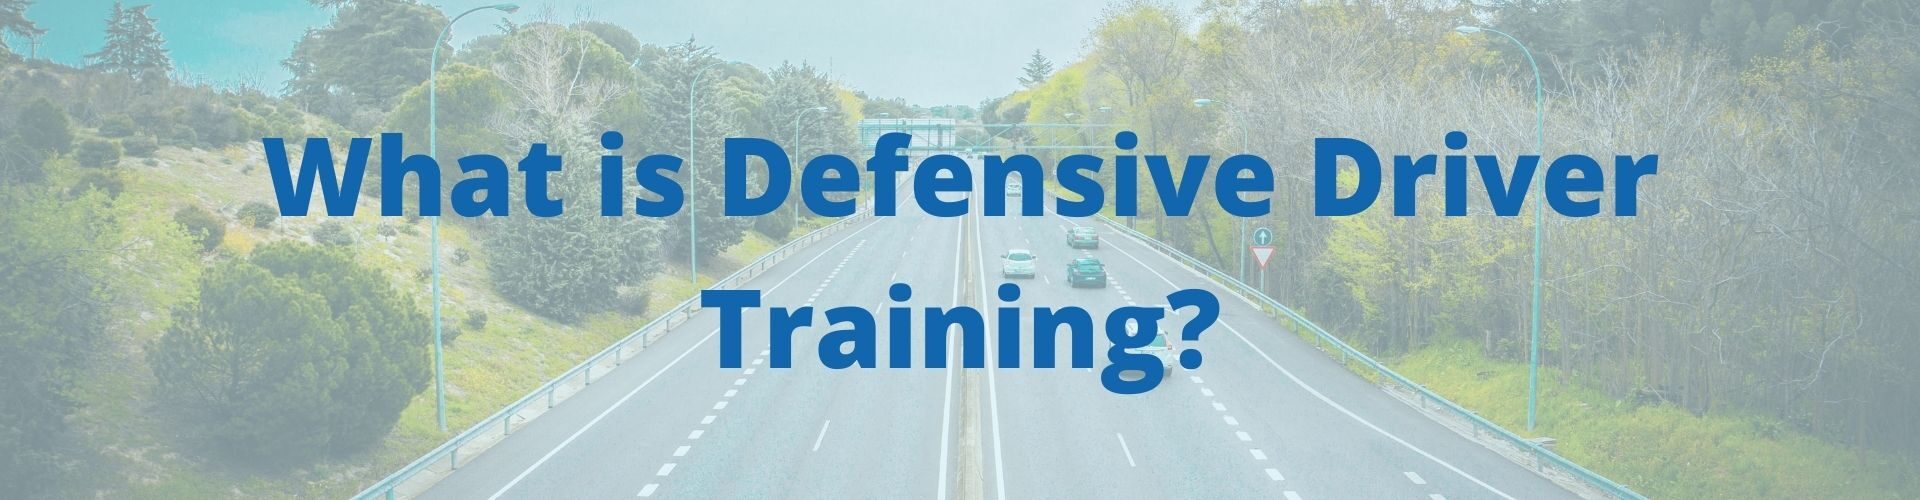 defensive driver training